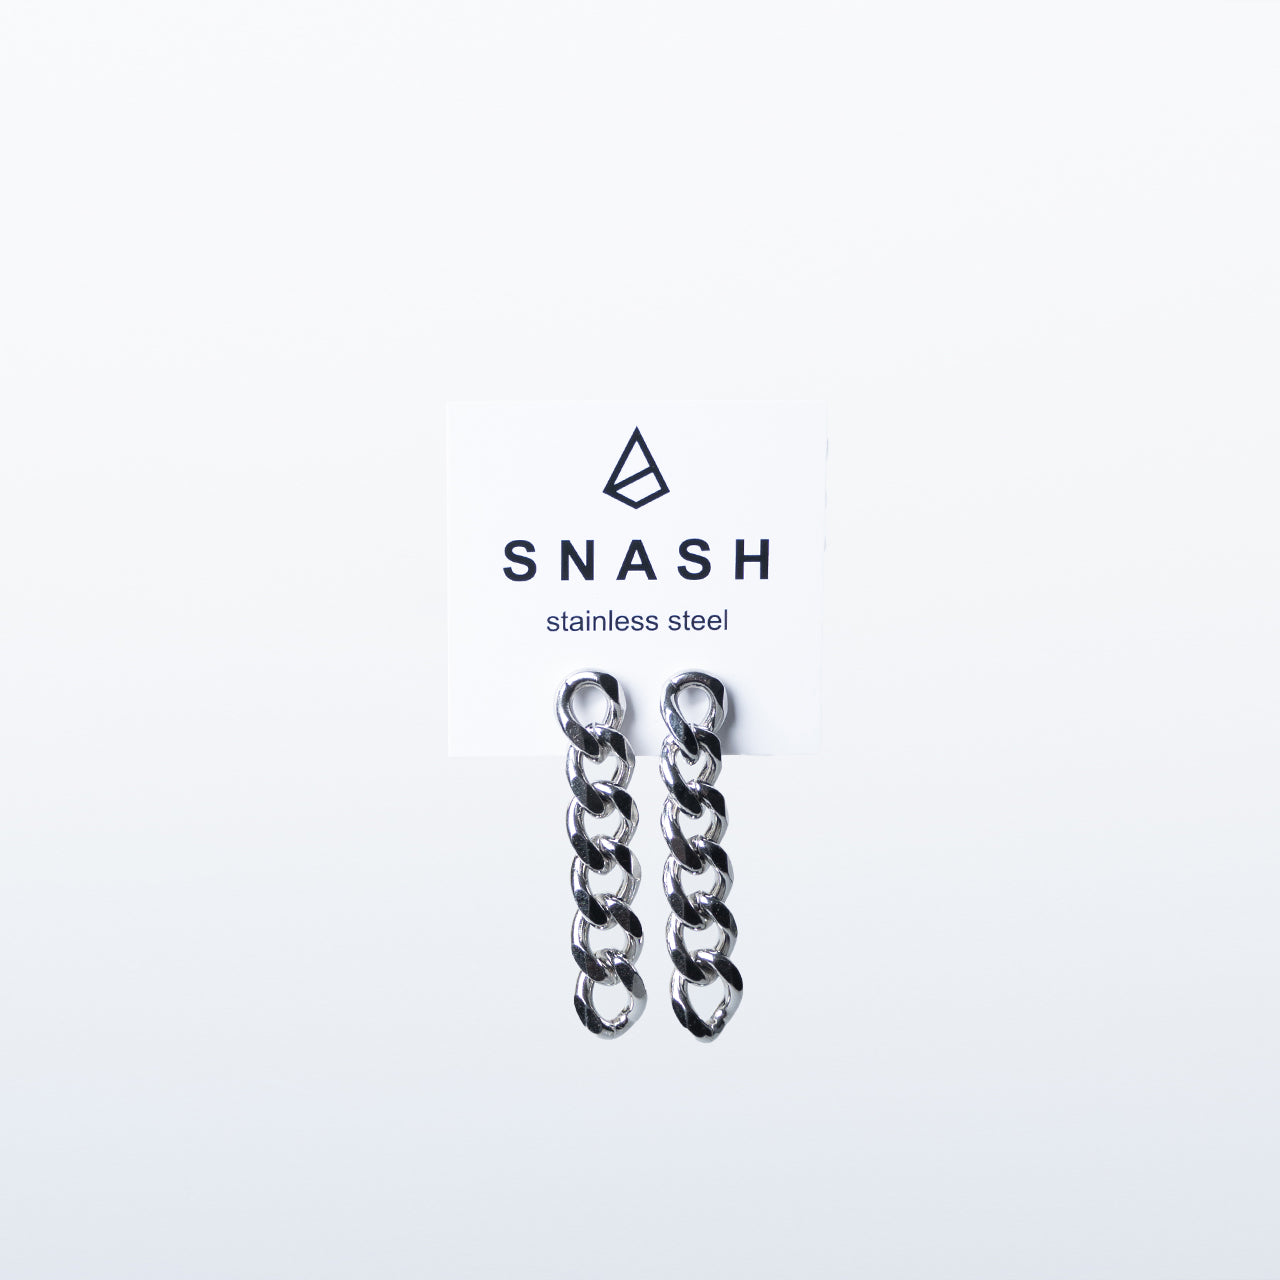 Snash - Earrings "Chain" silver